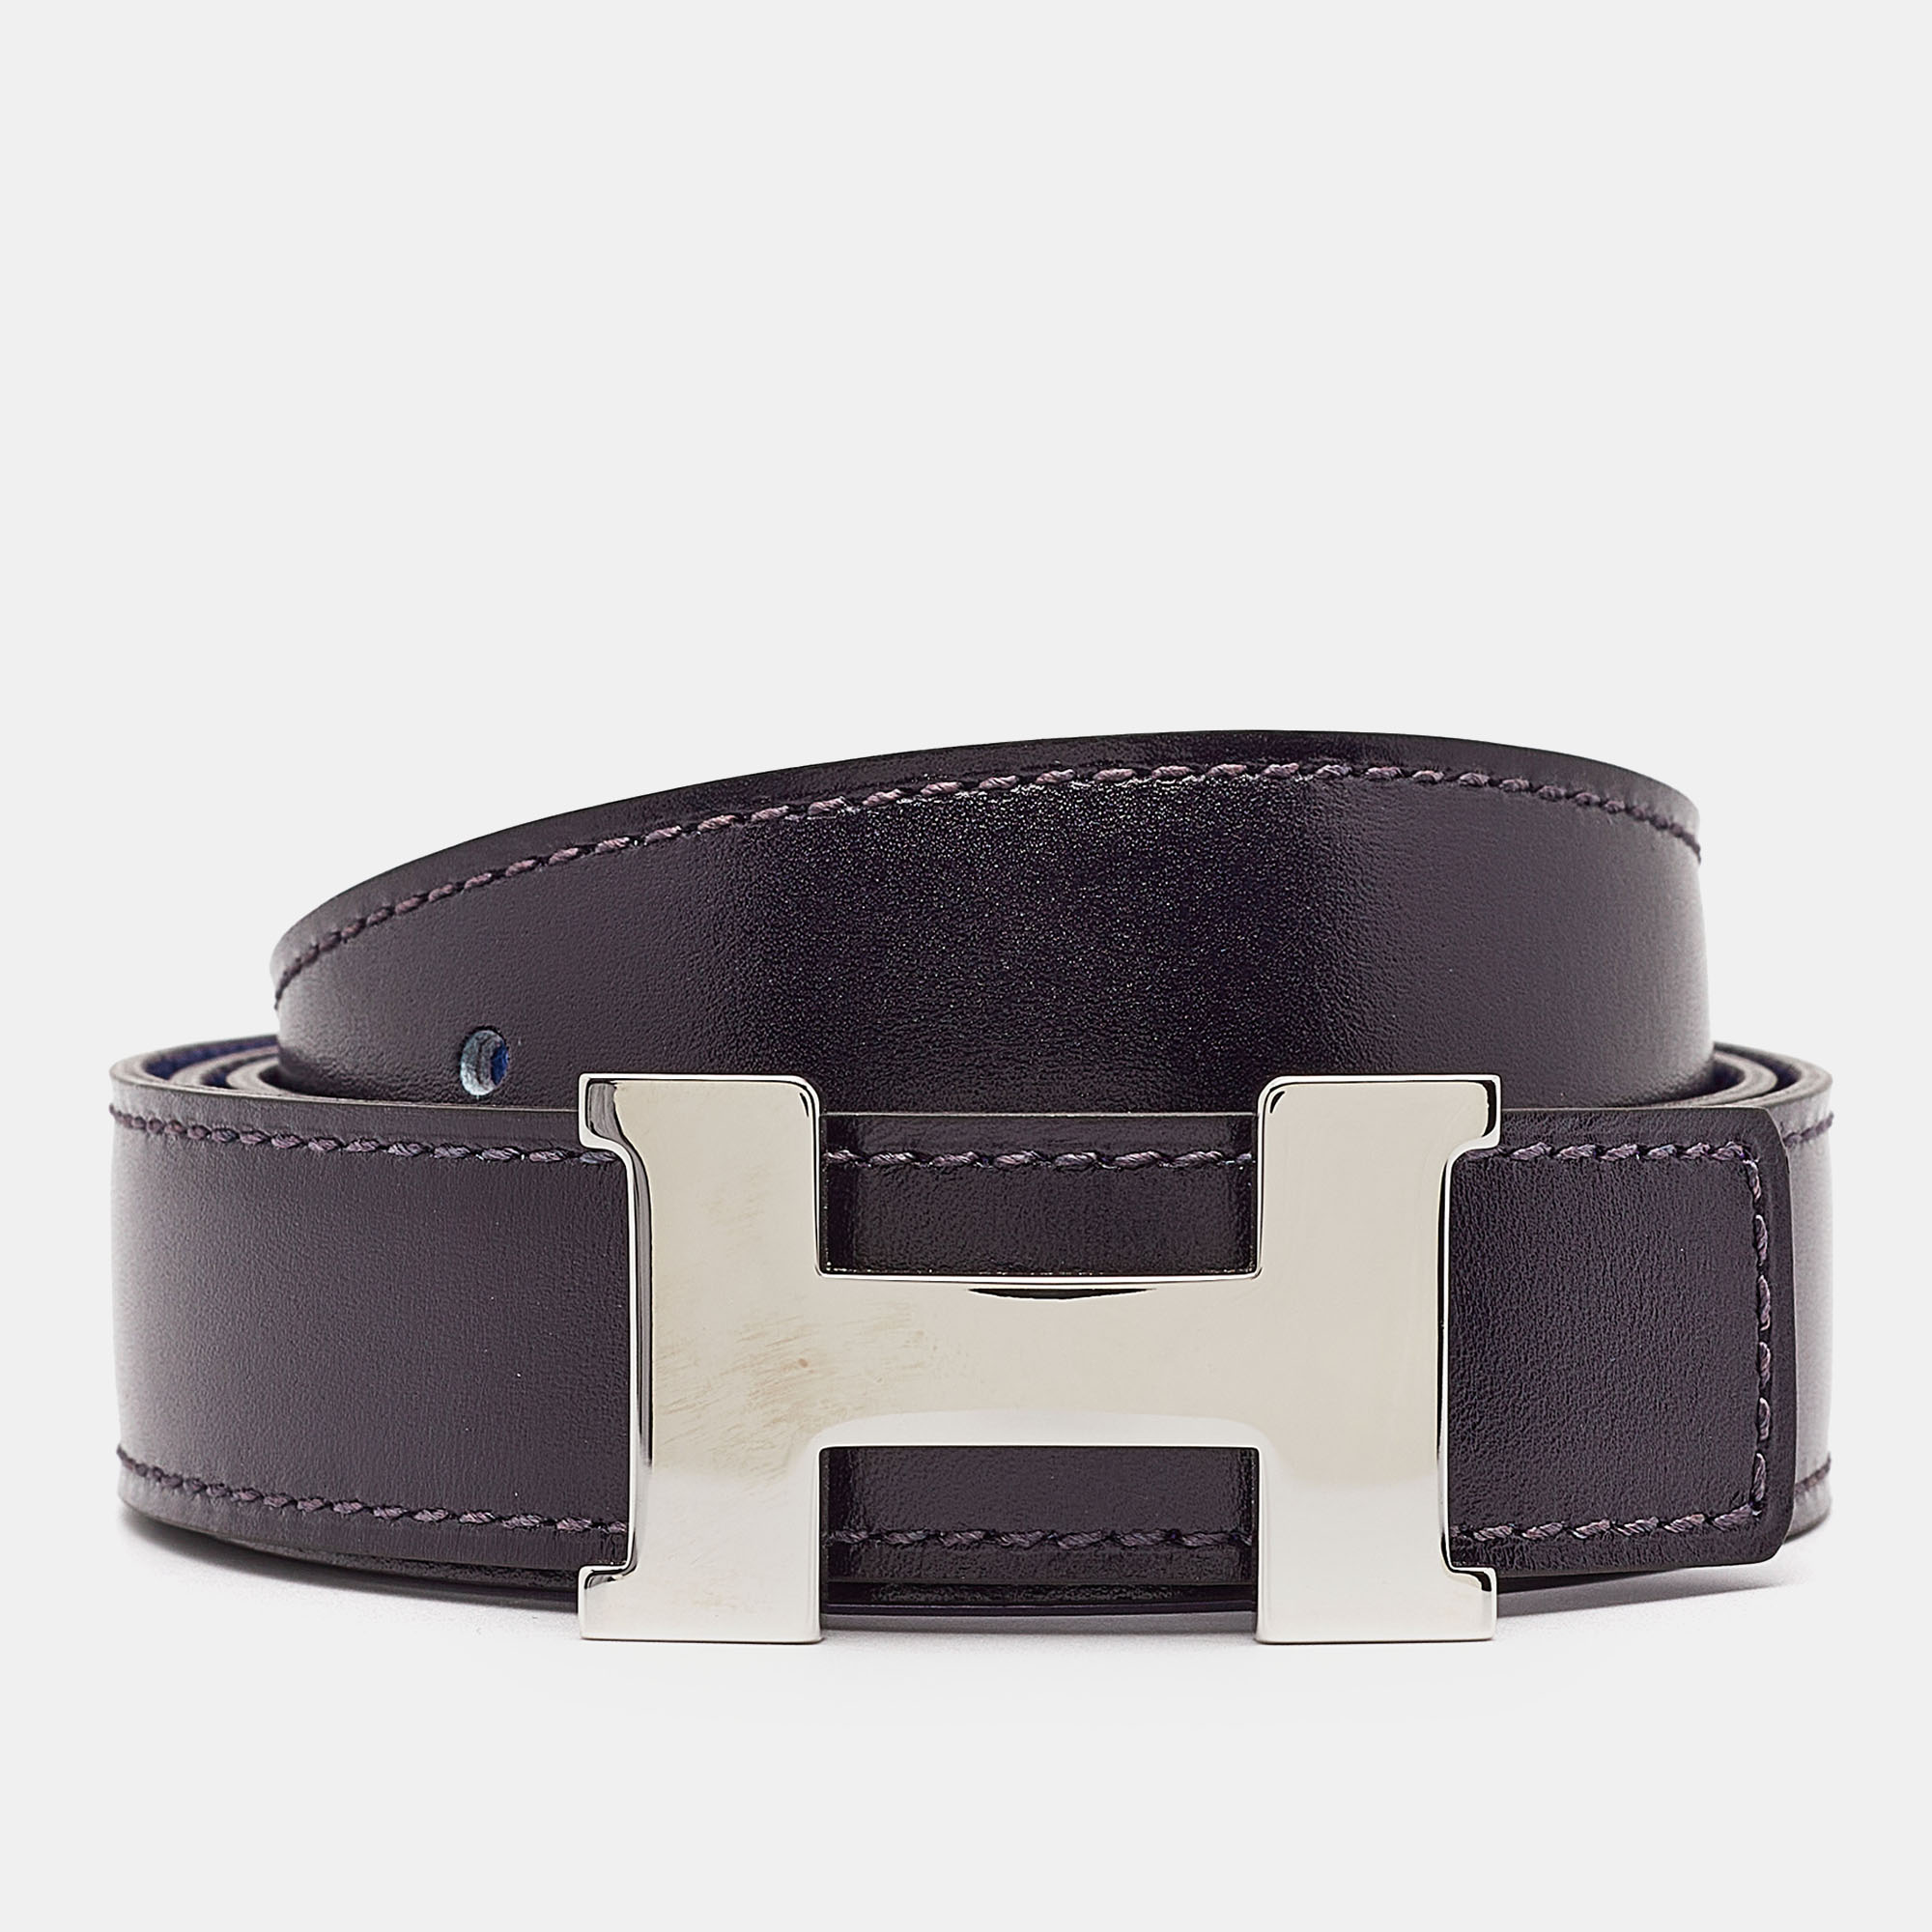 Hermes bleu marine/bleu electrique box and togo leather constance reversible belt 90 cm